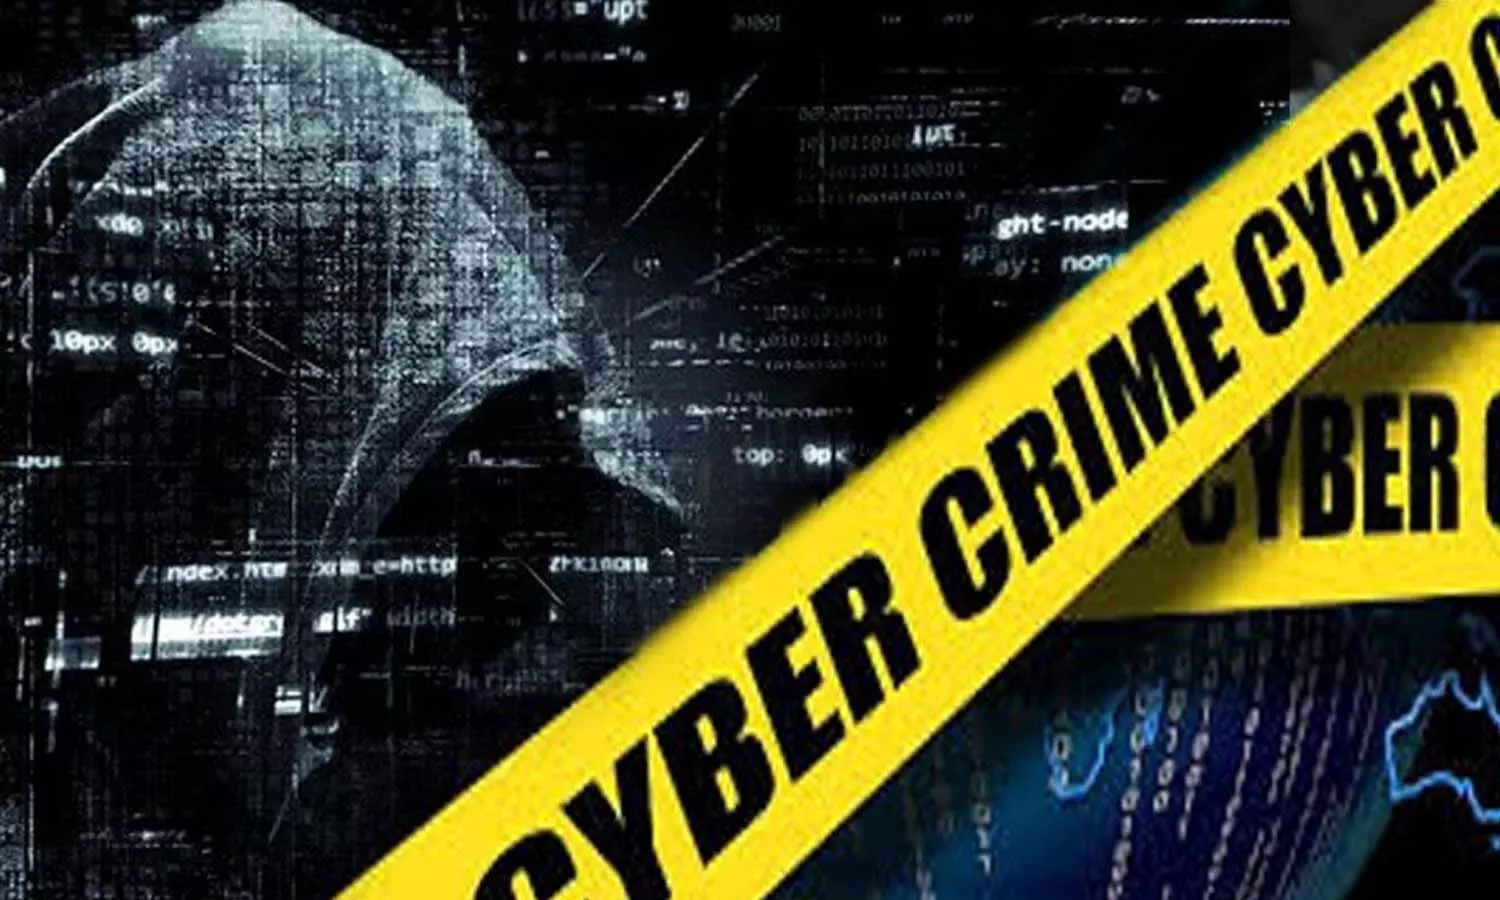 Cyber Crime News